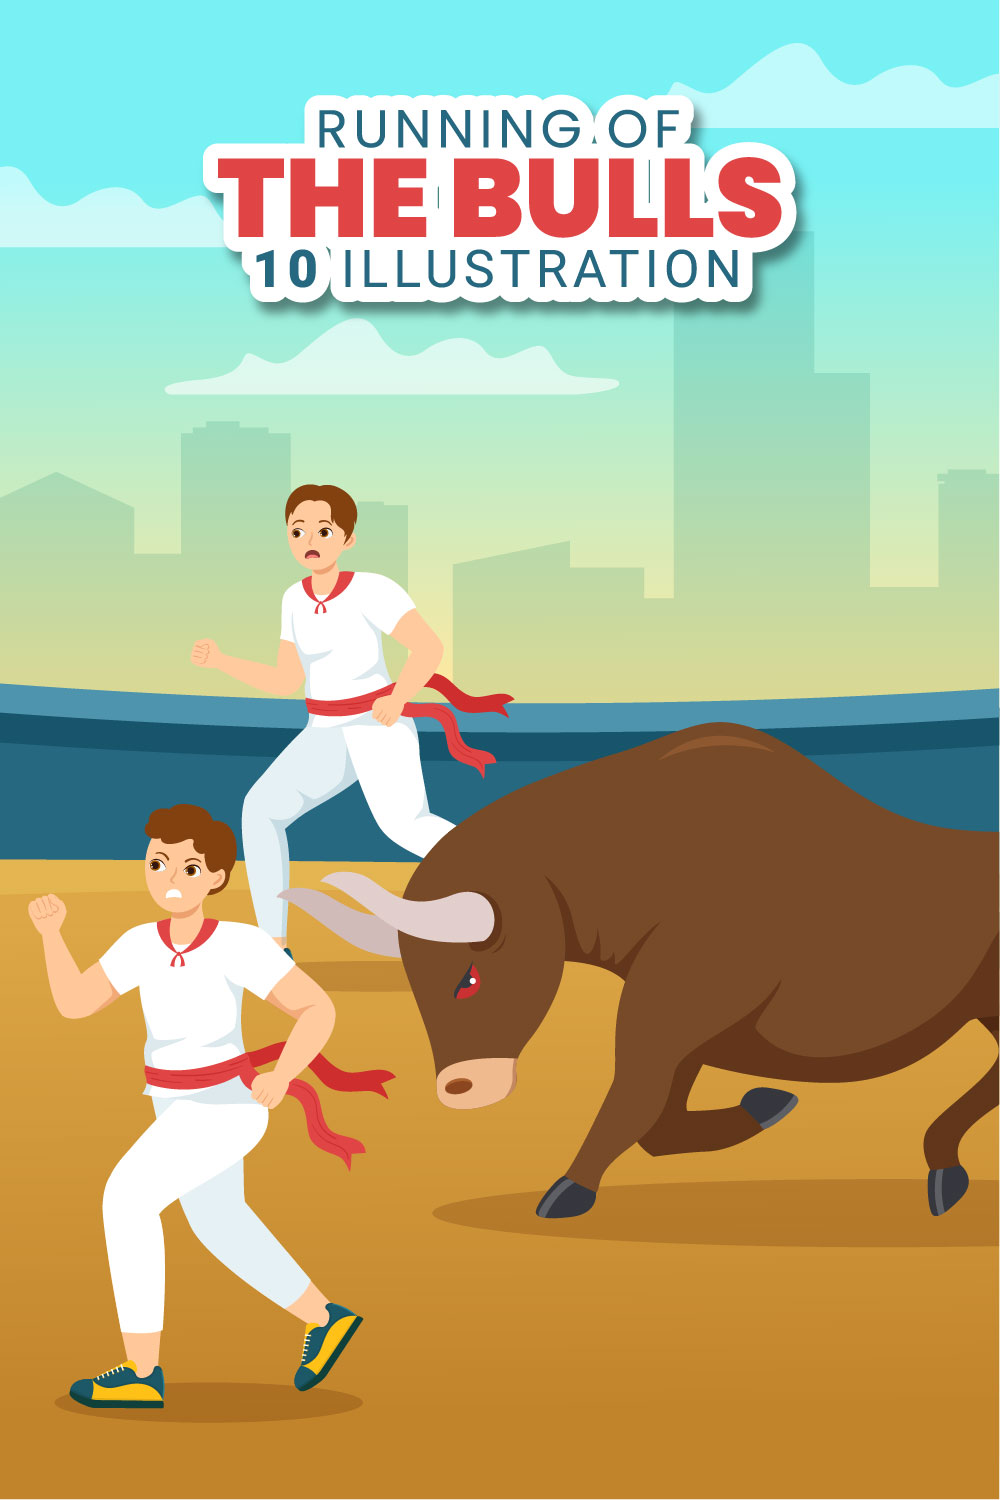 10 Running of the Bulls Illustration pinterest preview image.